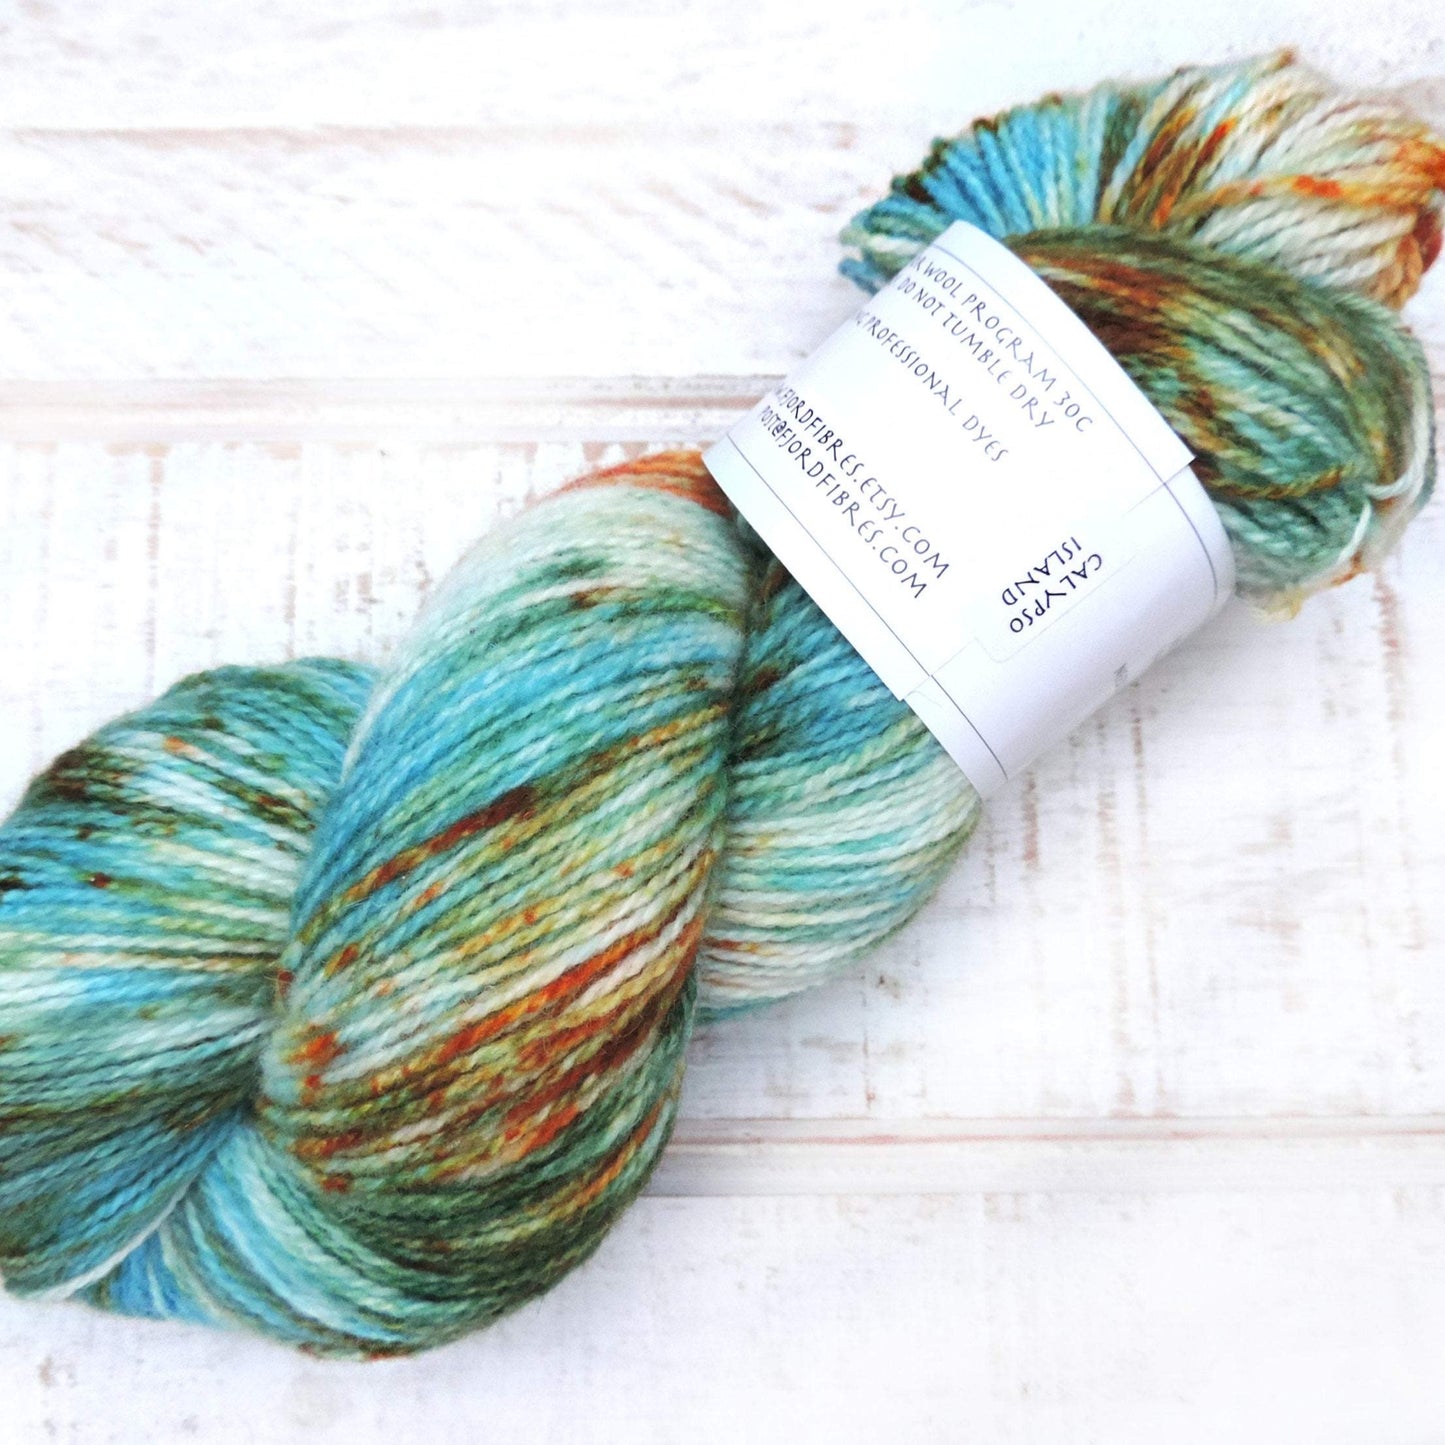 Calypso Island - Trollfjord sock - Hand Dyed Yarn - Variegated Yarn